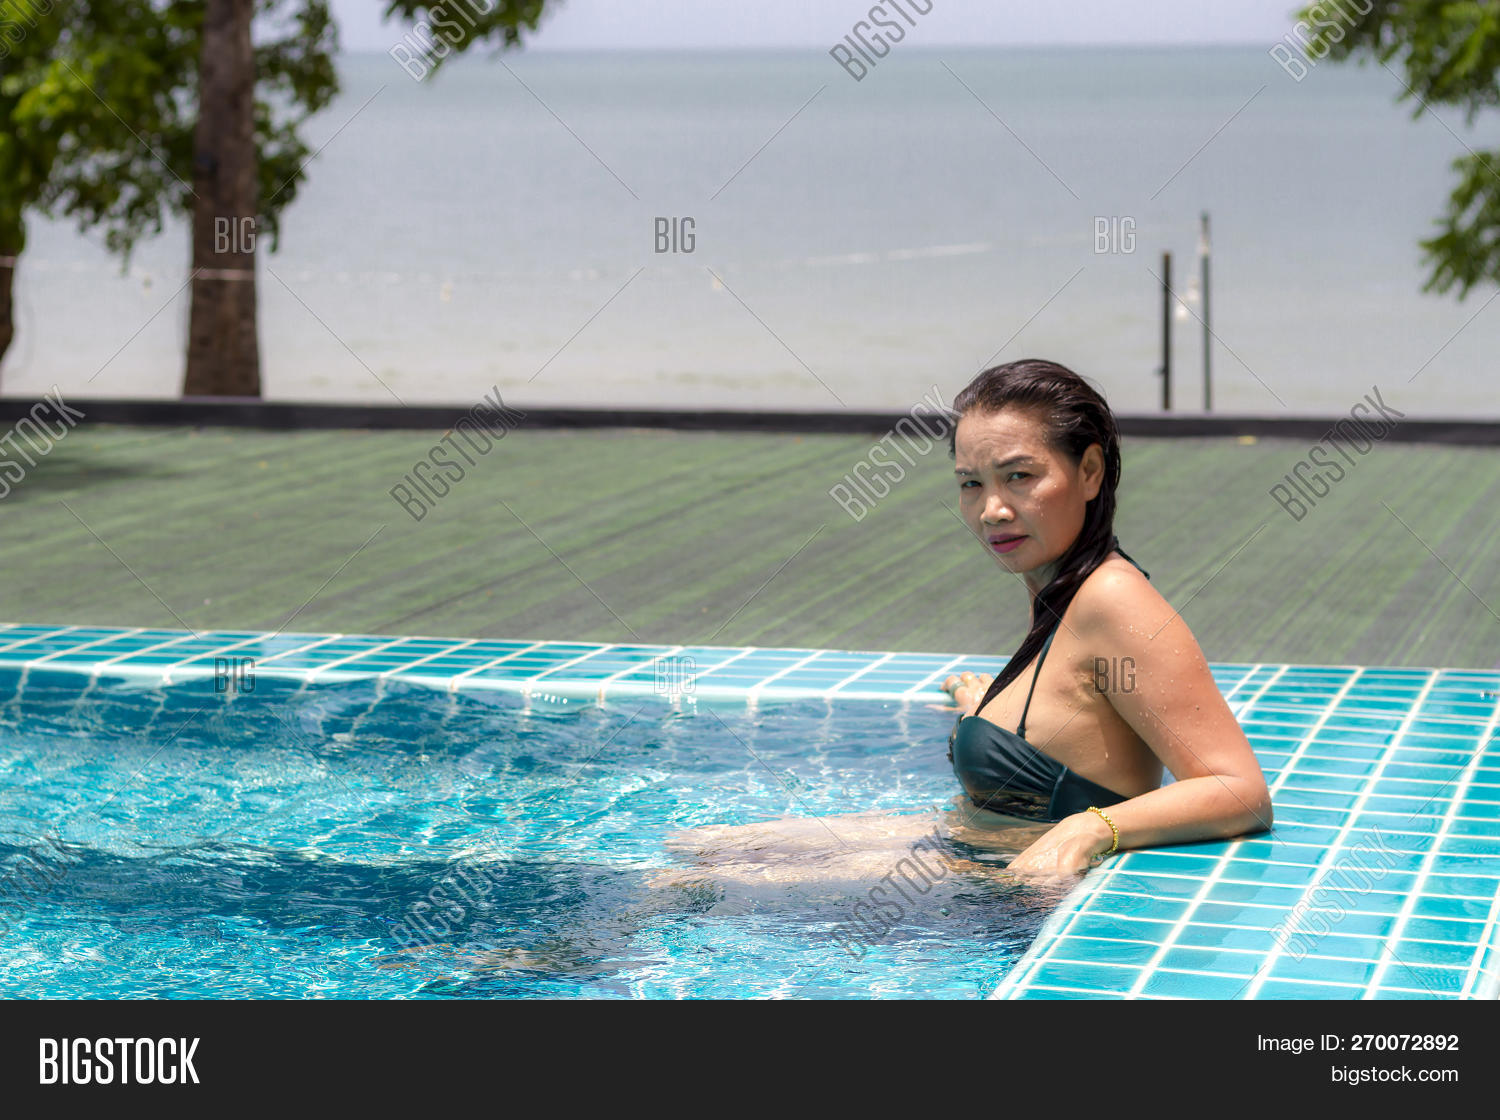 clarissa agnew share big tits poolside photos